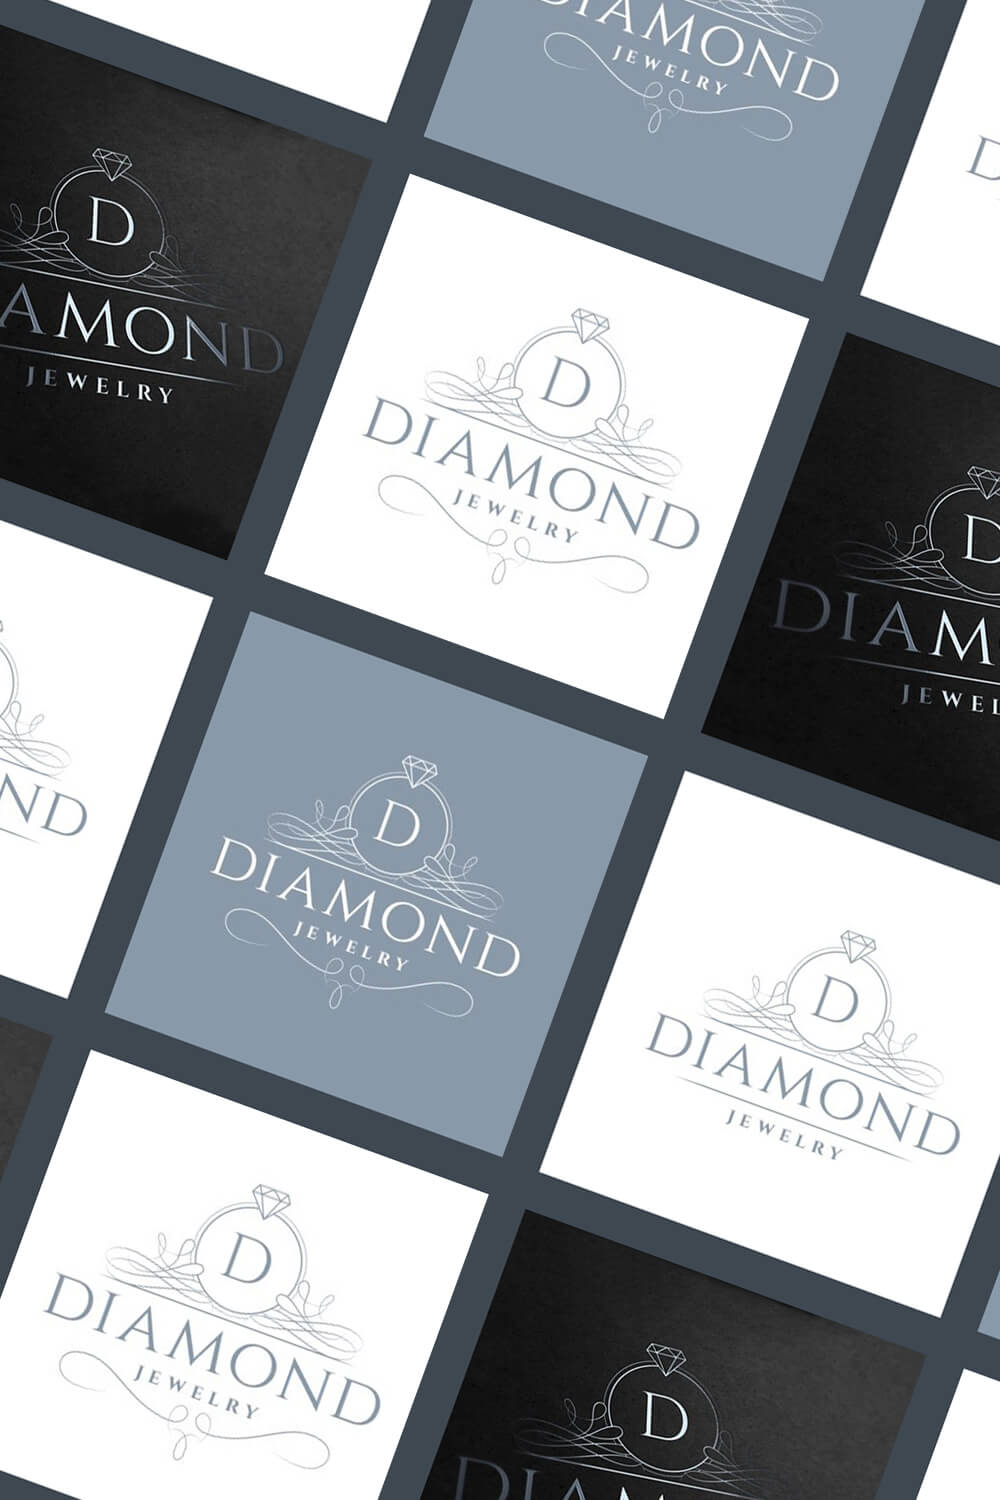 Tasted 45 degree diamond jewelry logos.